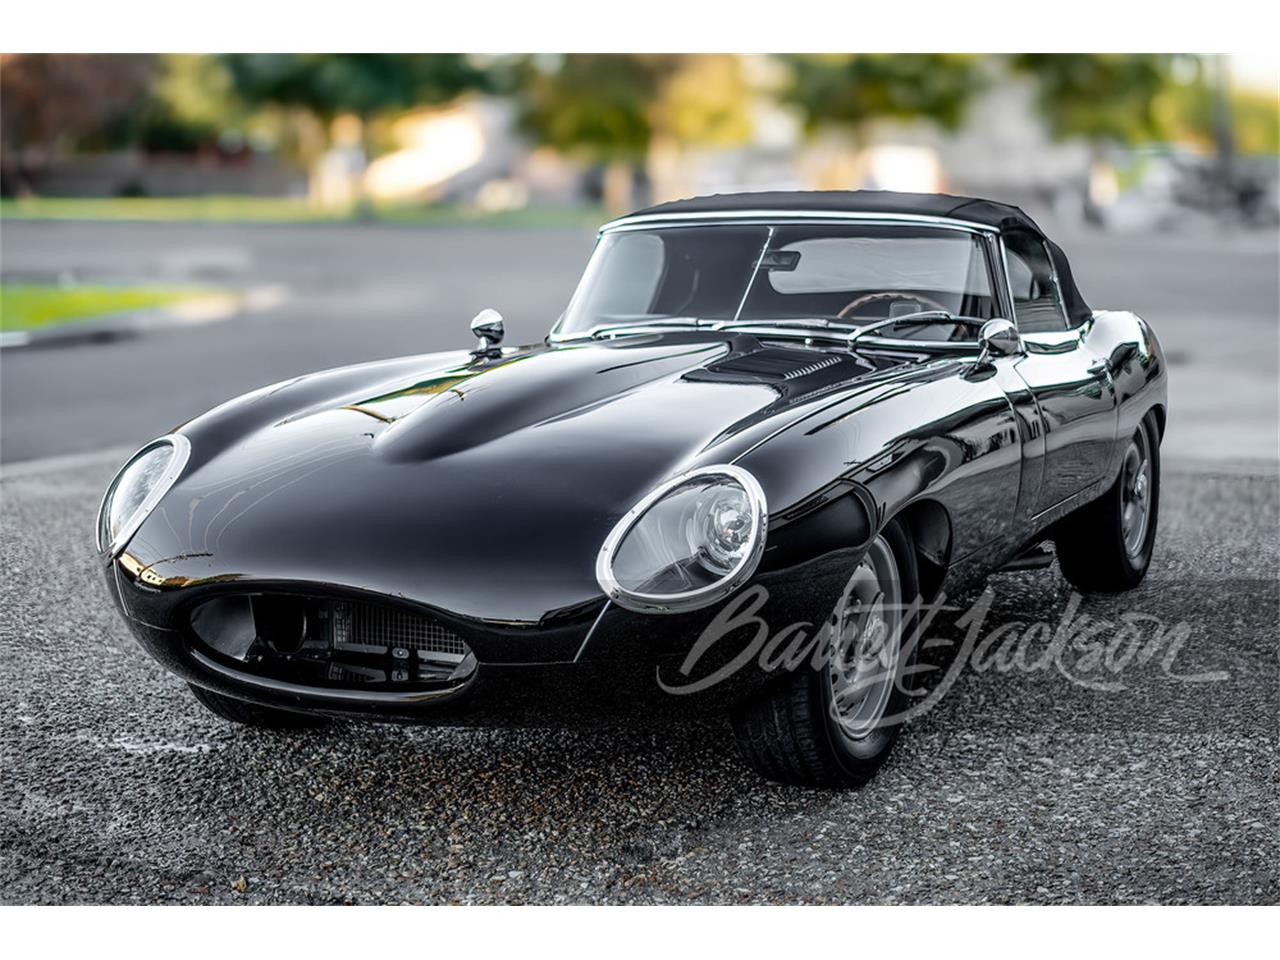 For Sale at Auction: 1966 Jaguar XKE in Scottsdale, Arizona for sale in Scottsdale, AZ